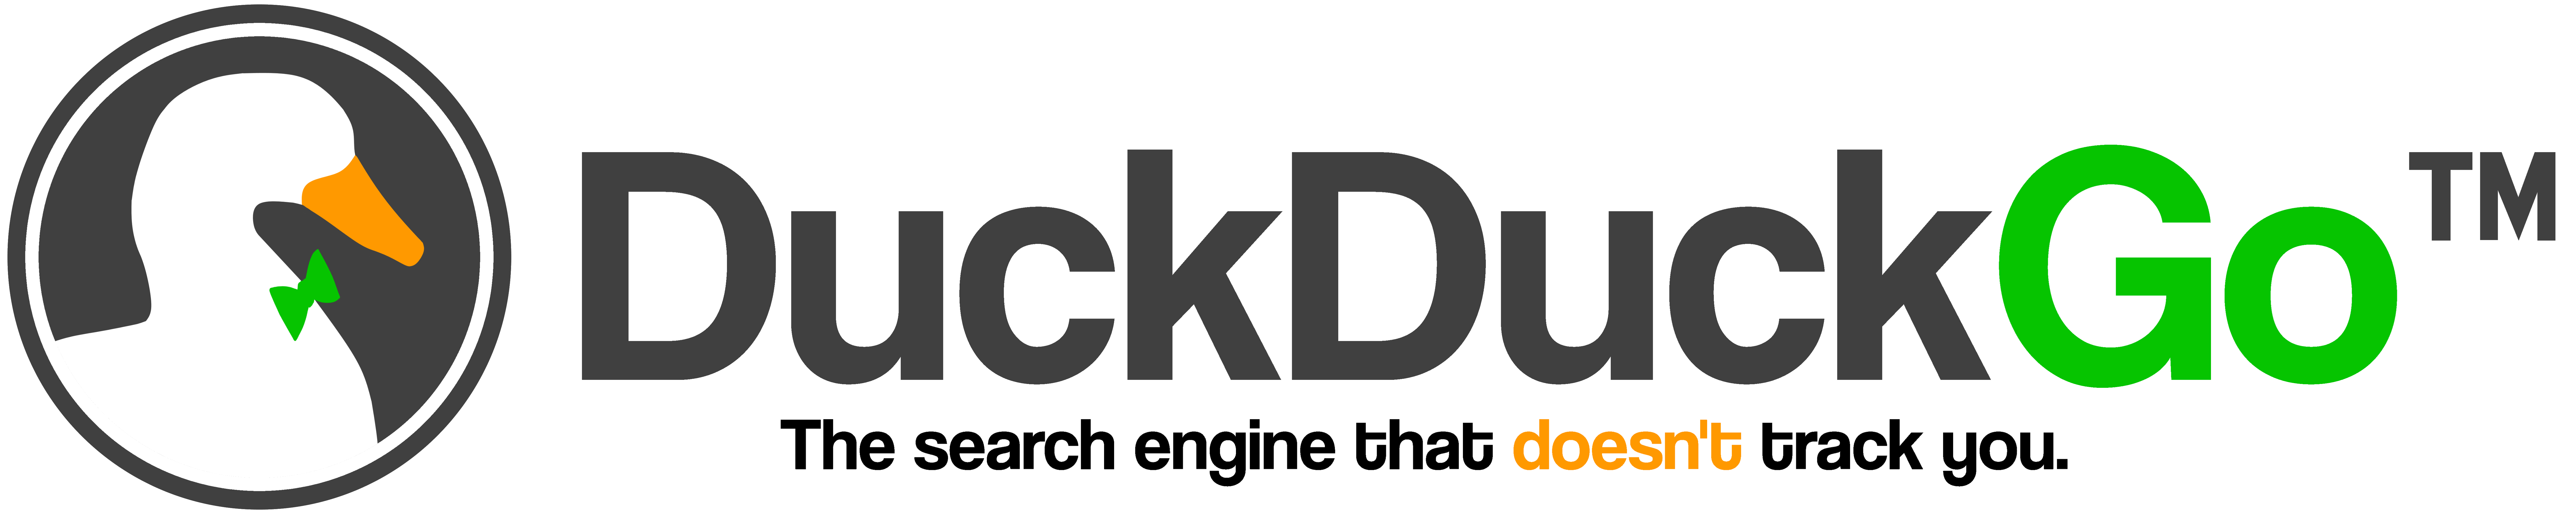 DuckDuckGo Logo - Redesign of my redesign of the DuckDuckGo logo. : duckduckgo